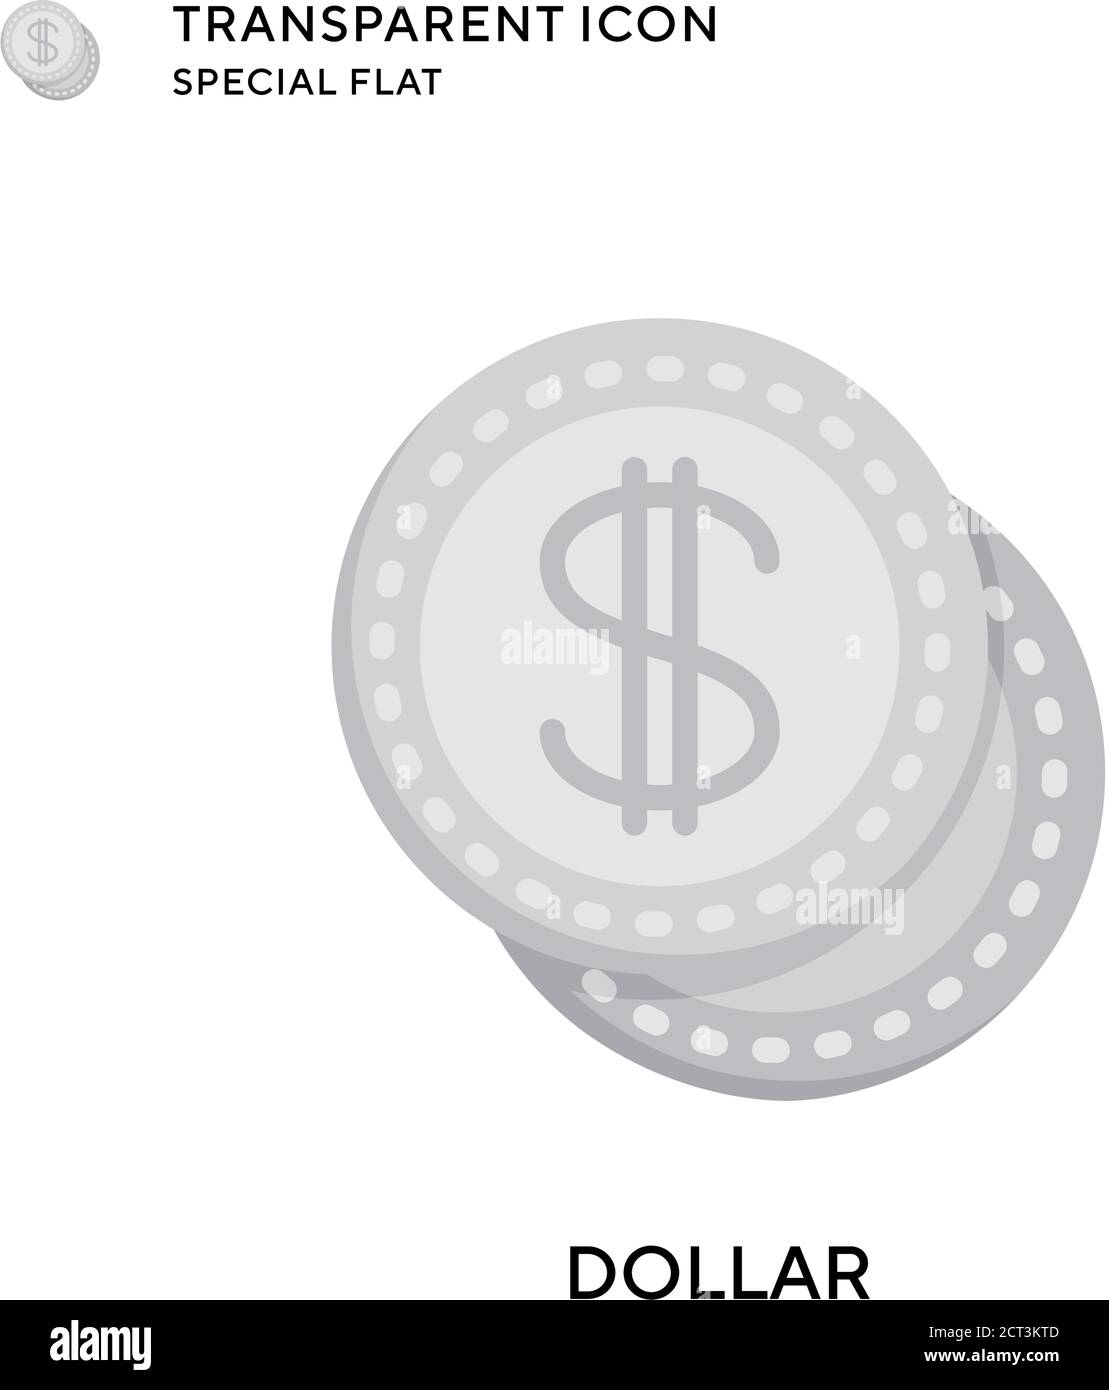 Dollar vector icon. Flat style illustration. EPS 10 vector. Stock Vector